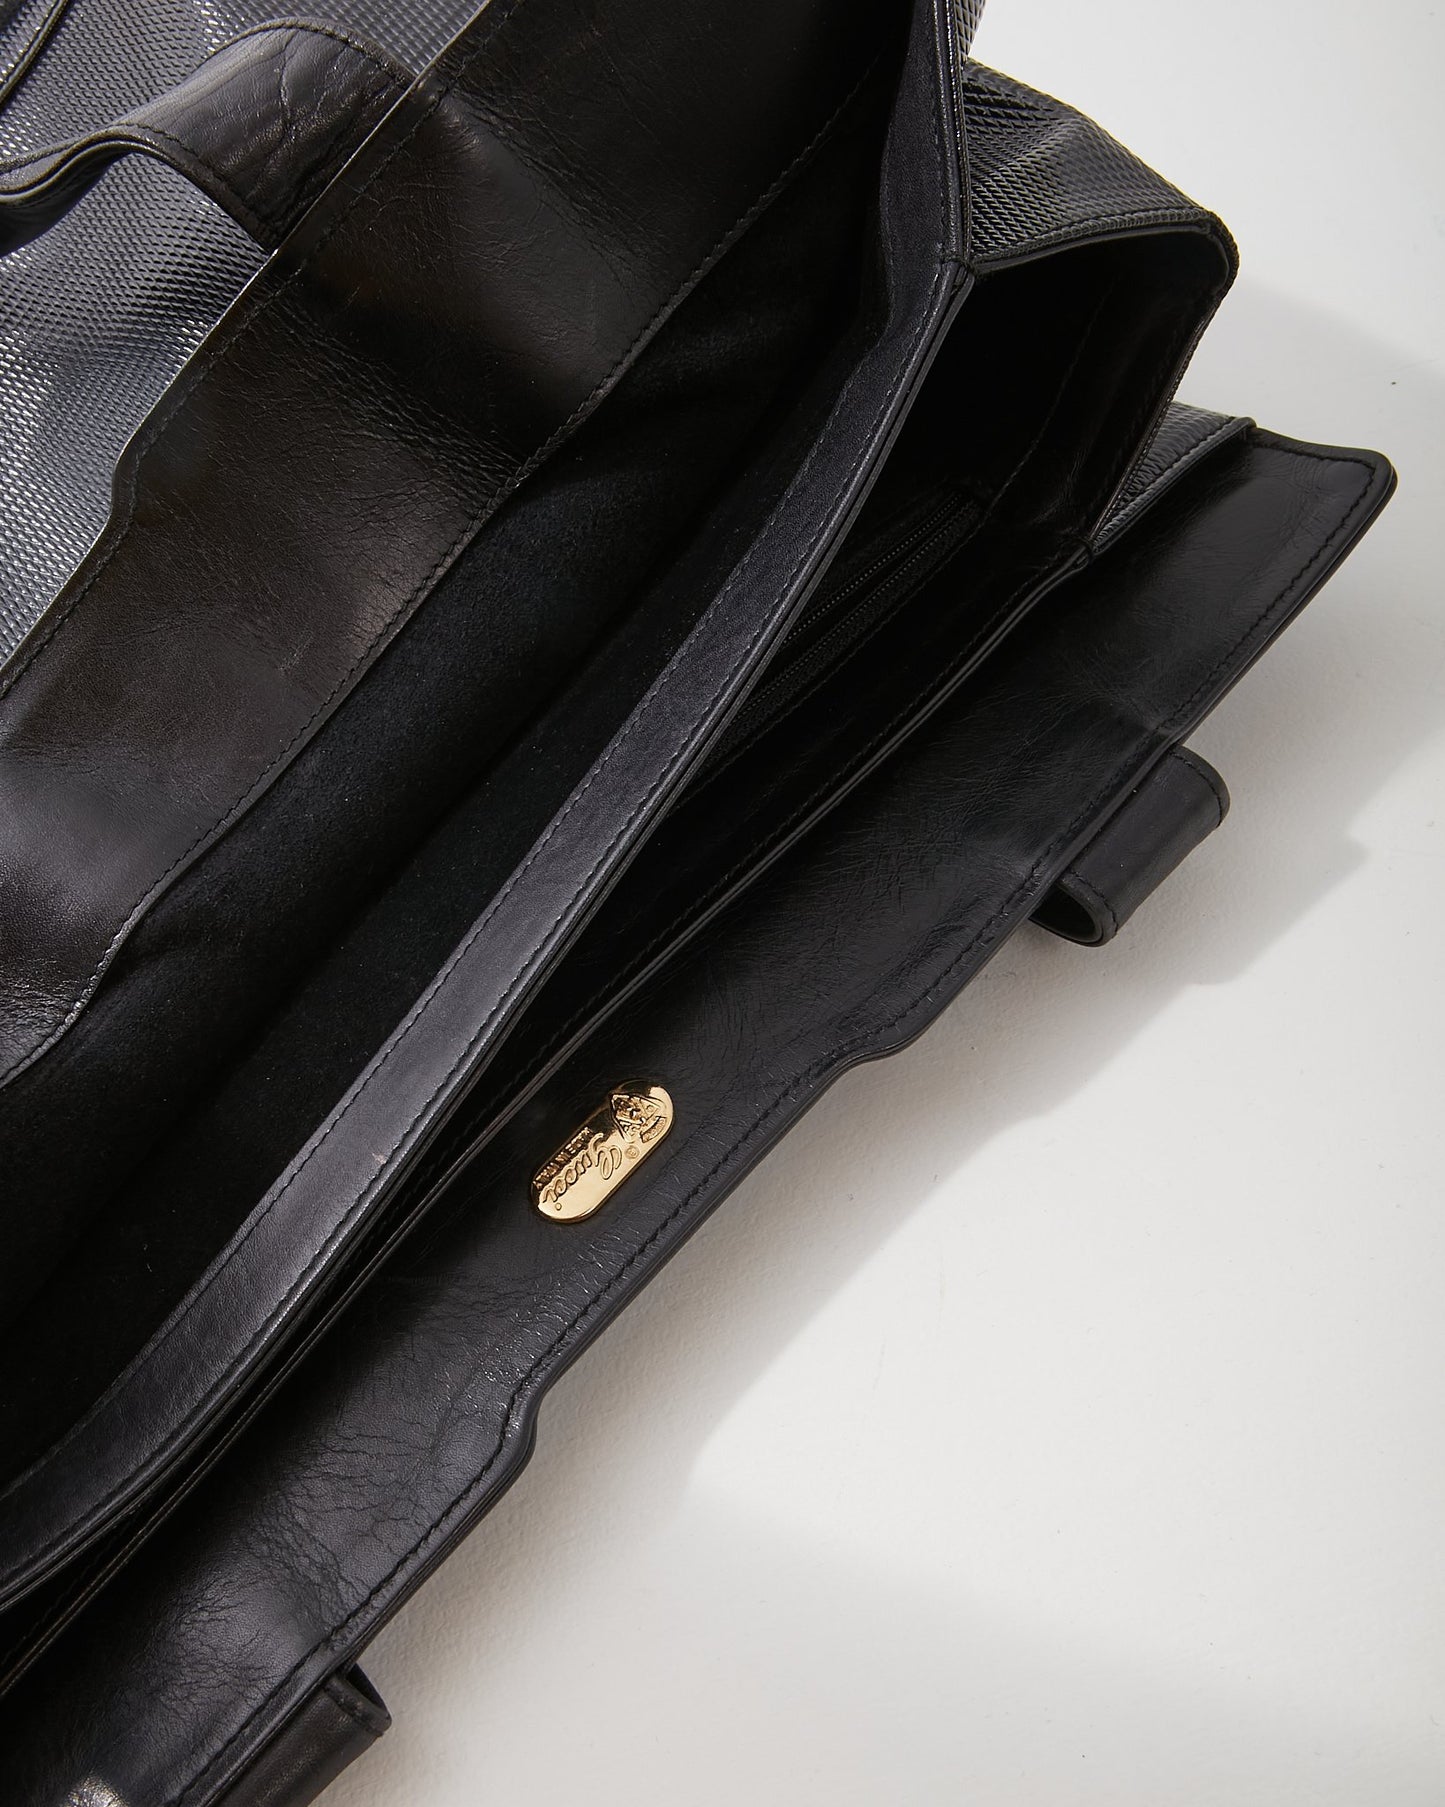 Gucci Black Textured Leather Vintage Top Handle Bag